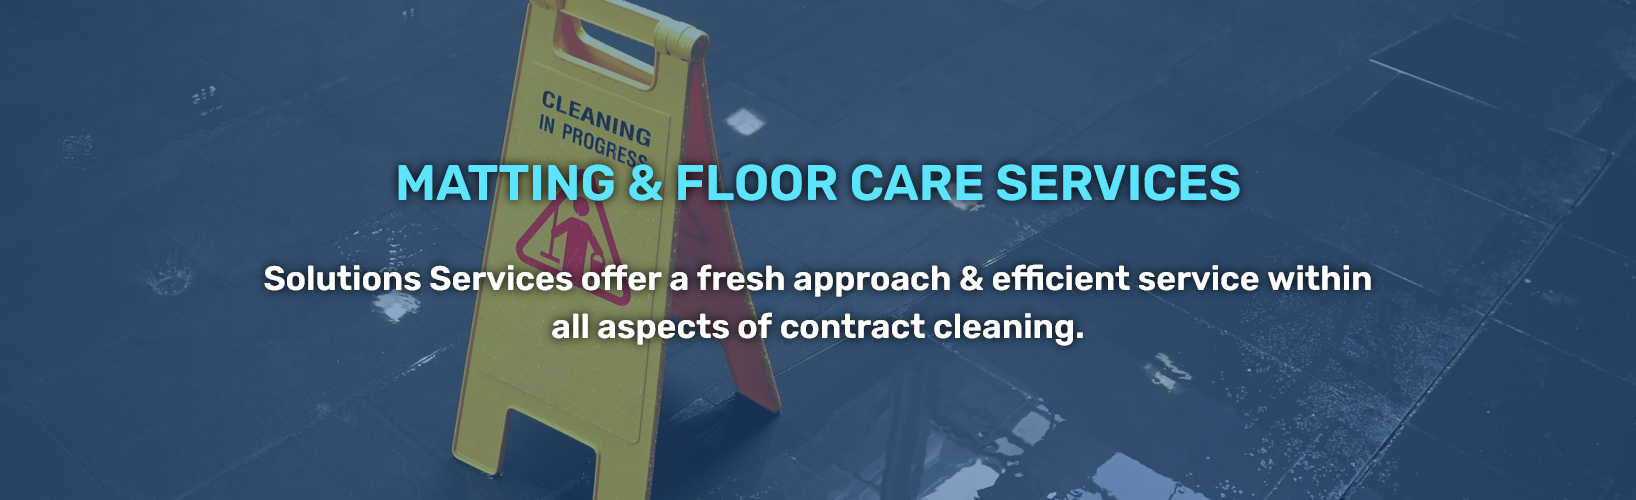 Matting & Floor Care Services